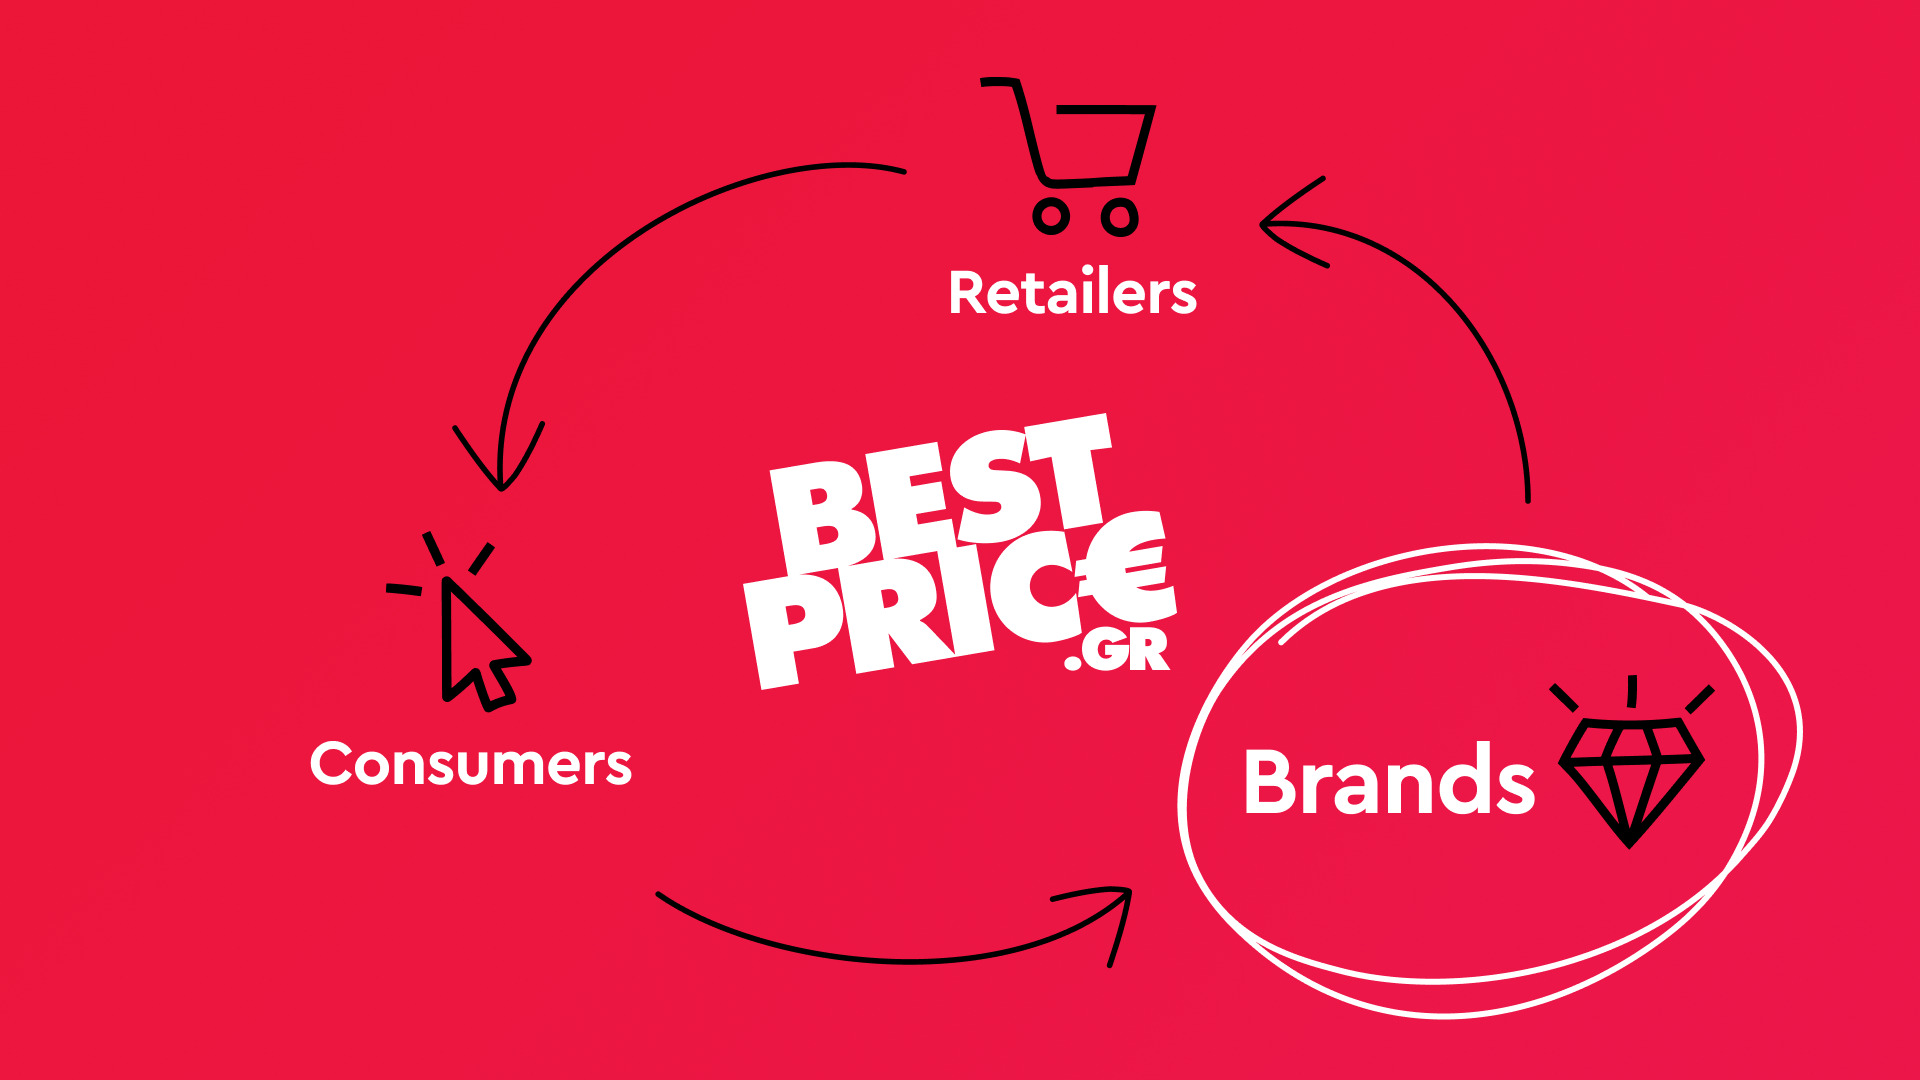 BestPrice for Brands: Τα Brands συμμετέχουν στο αγοραστικό «ταξίδι» των καταναλωτών